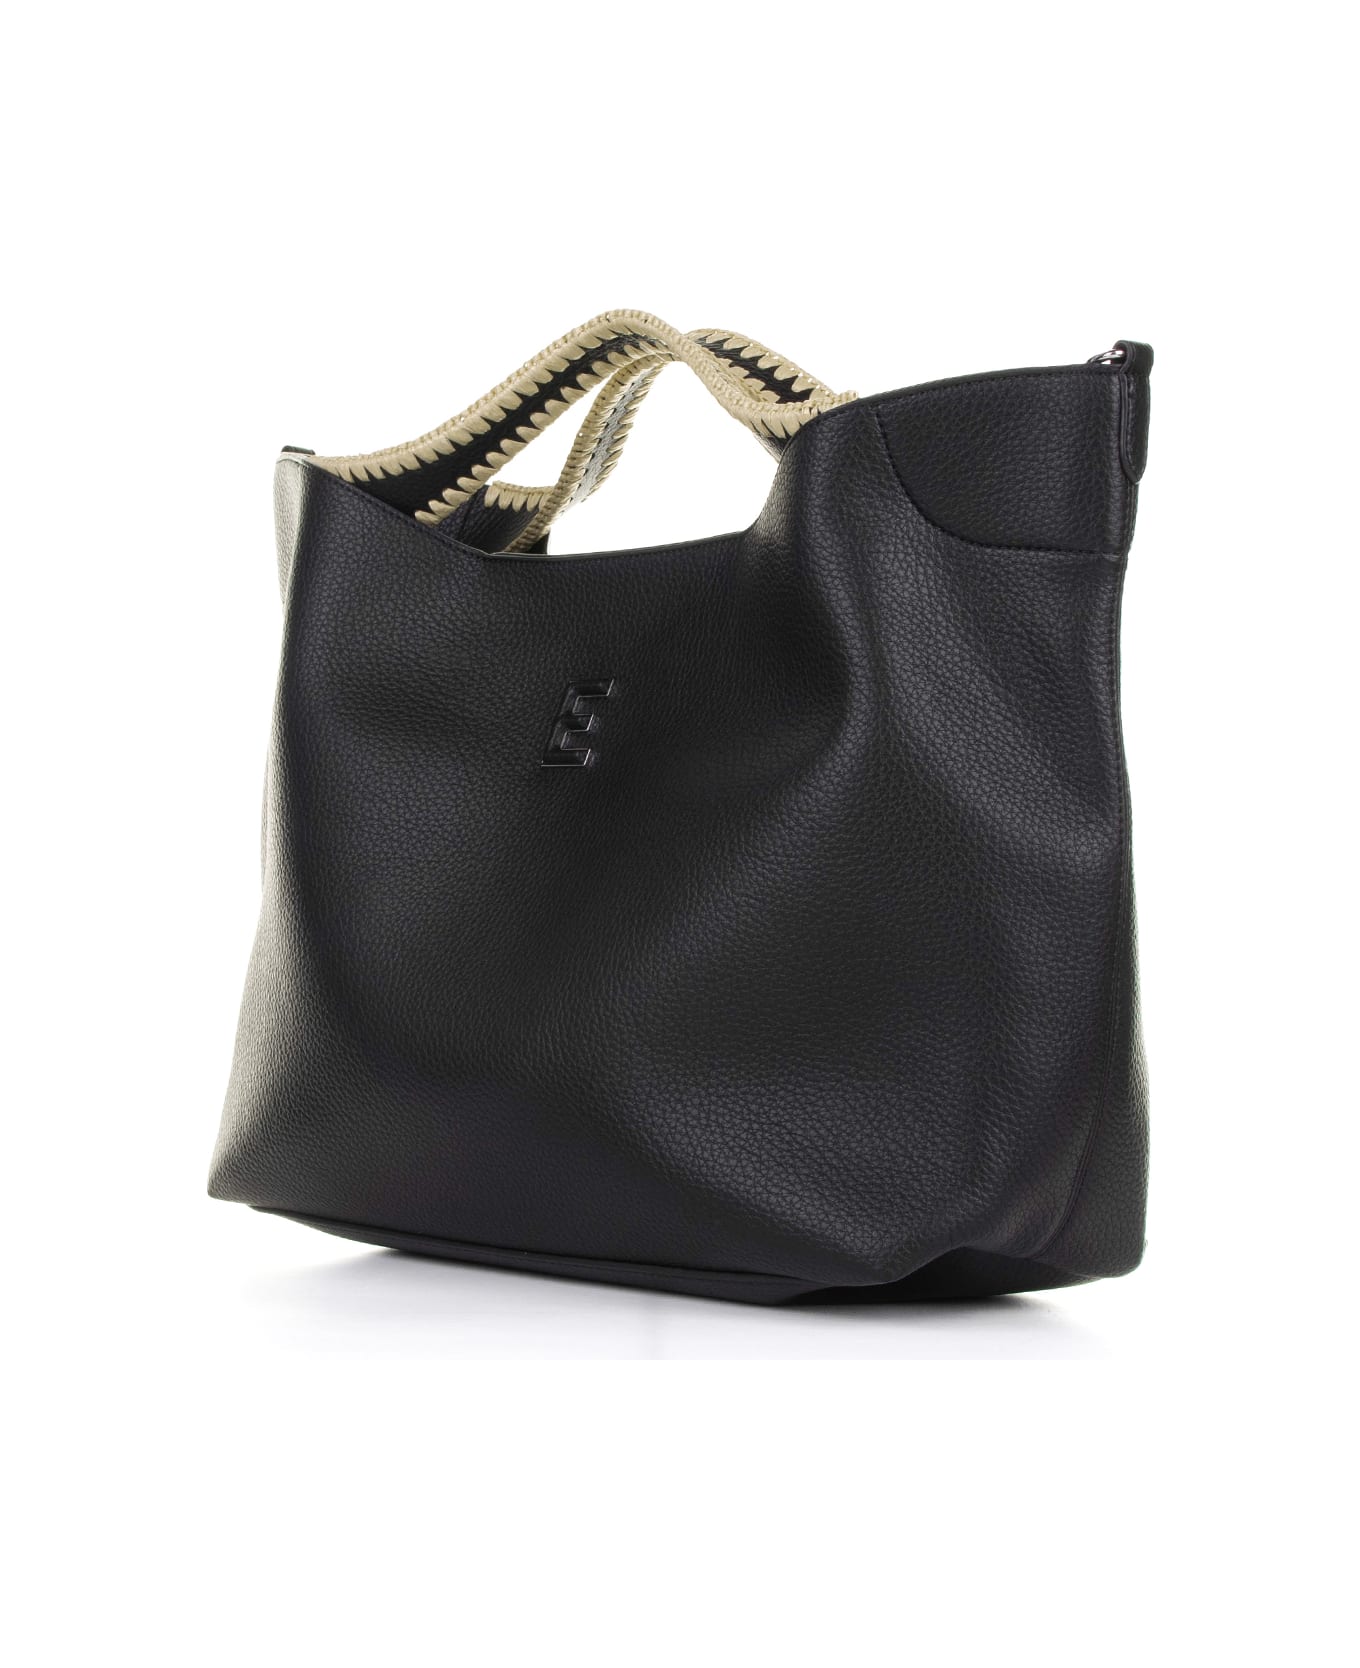 Ermanno Scervino Rachele Large Black Leather Handbag - NERO トートバッグ